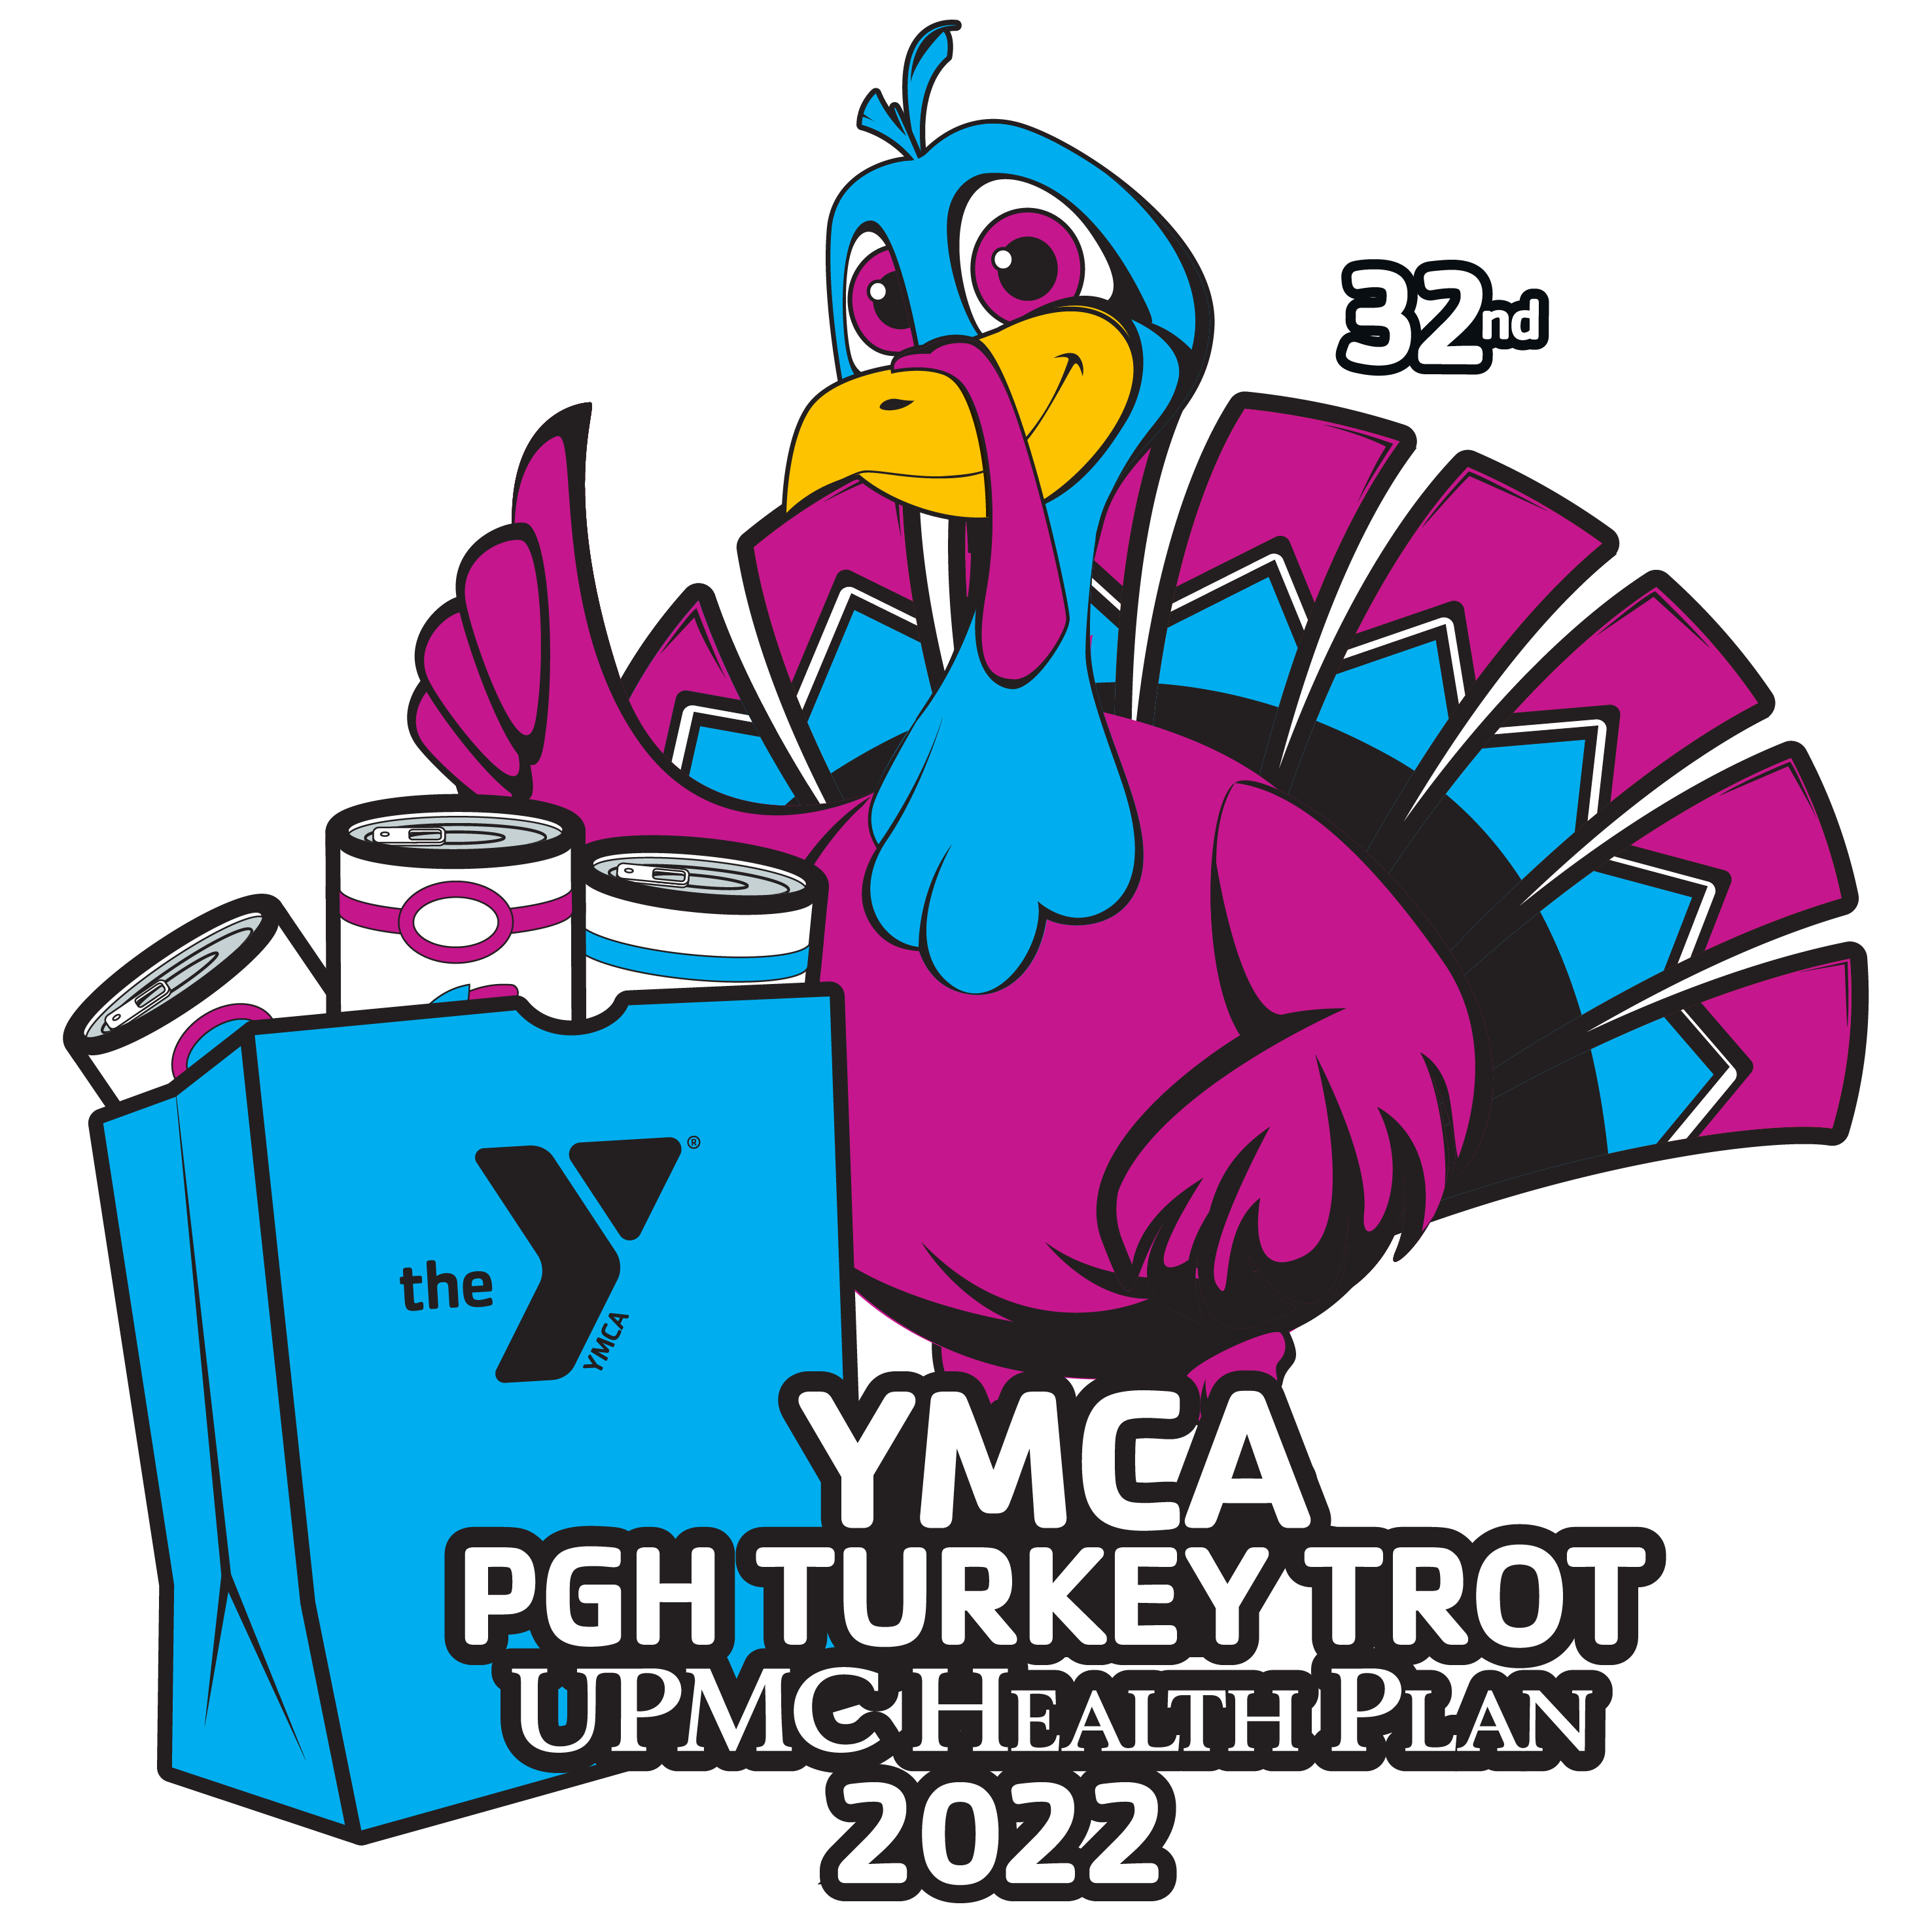 YMCA Turkey Trot presented by UPMC Health Plan